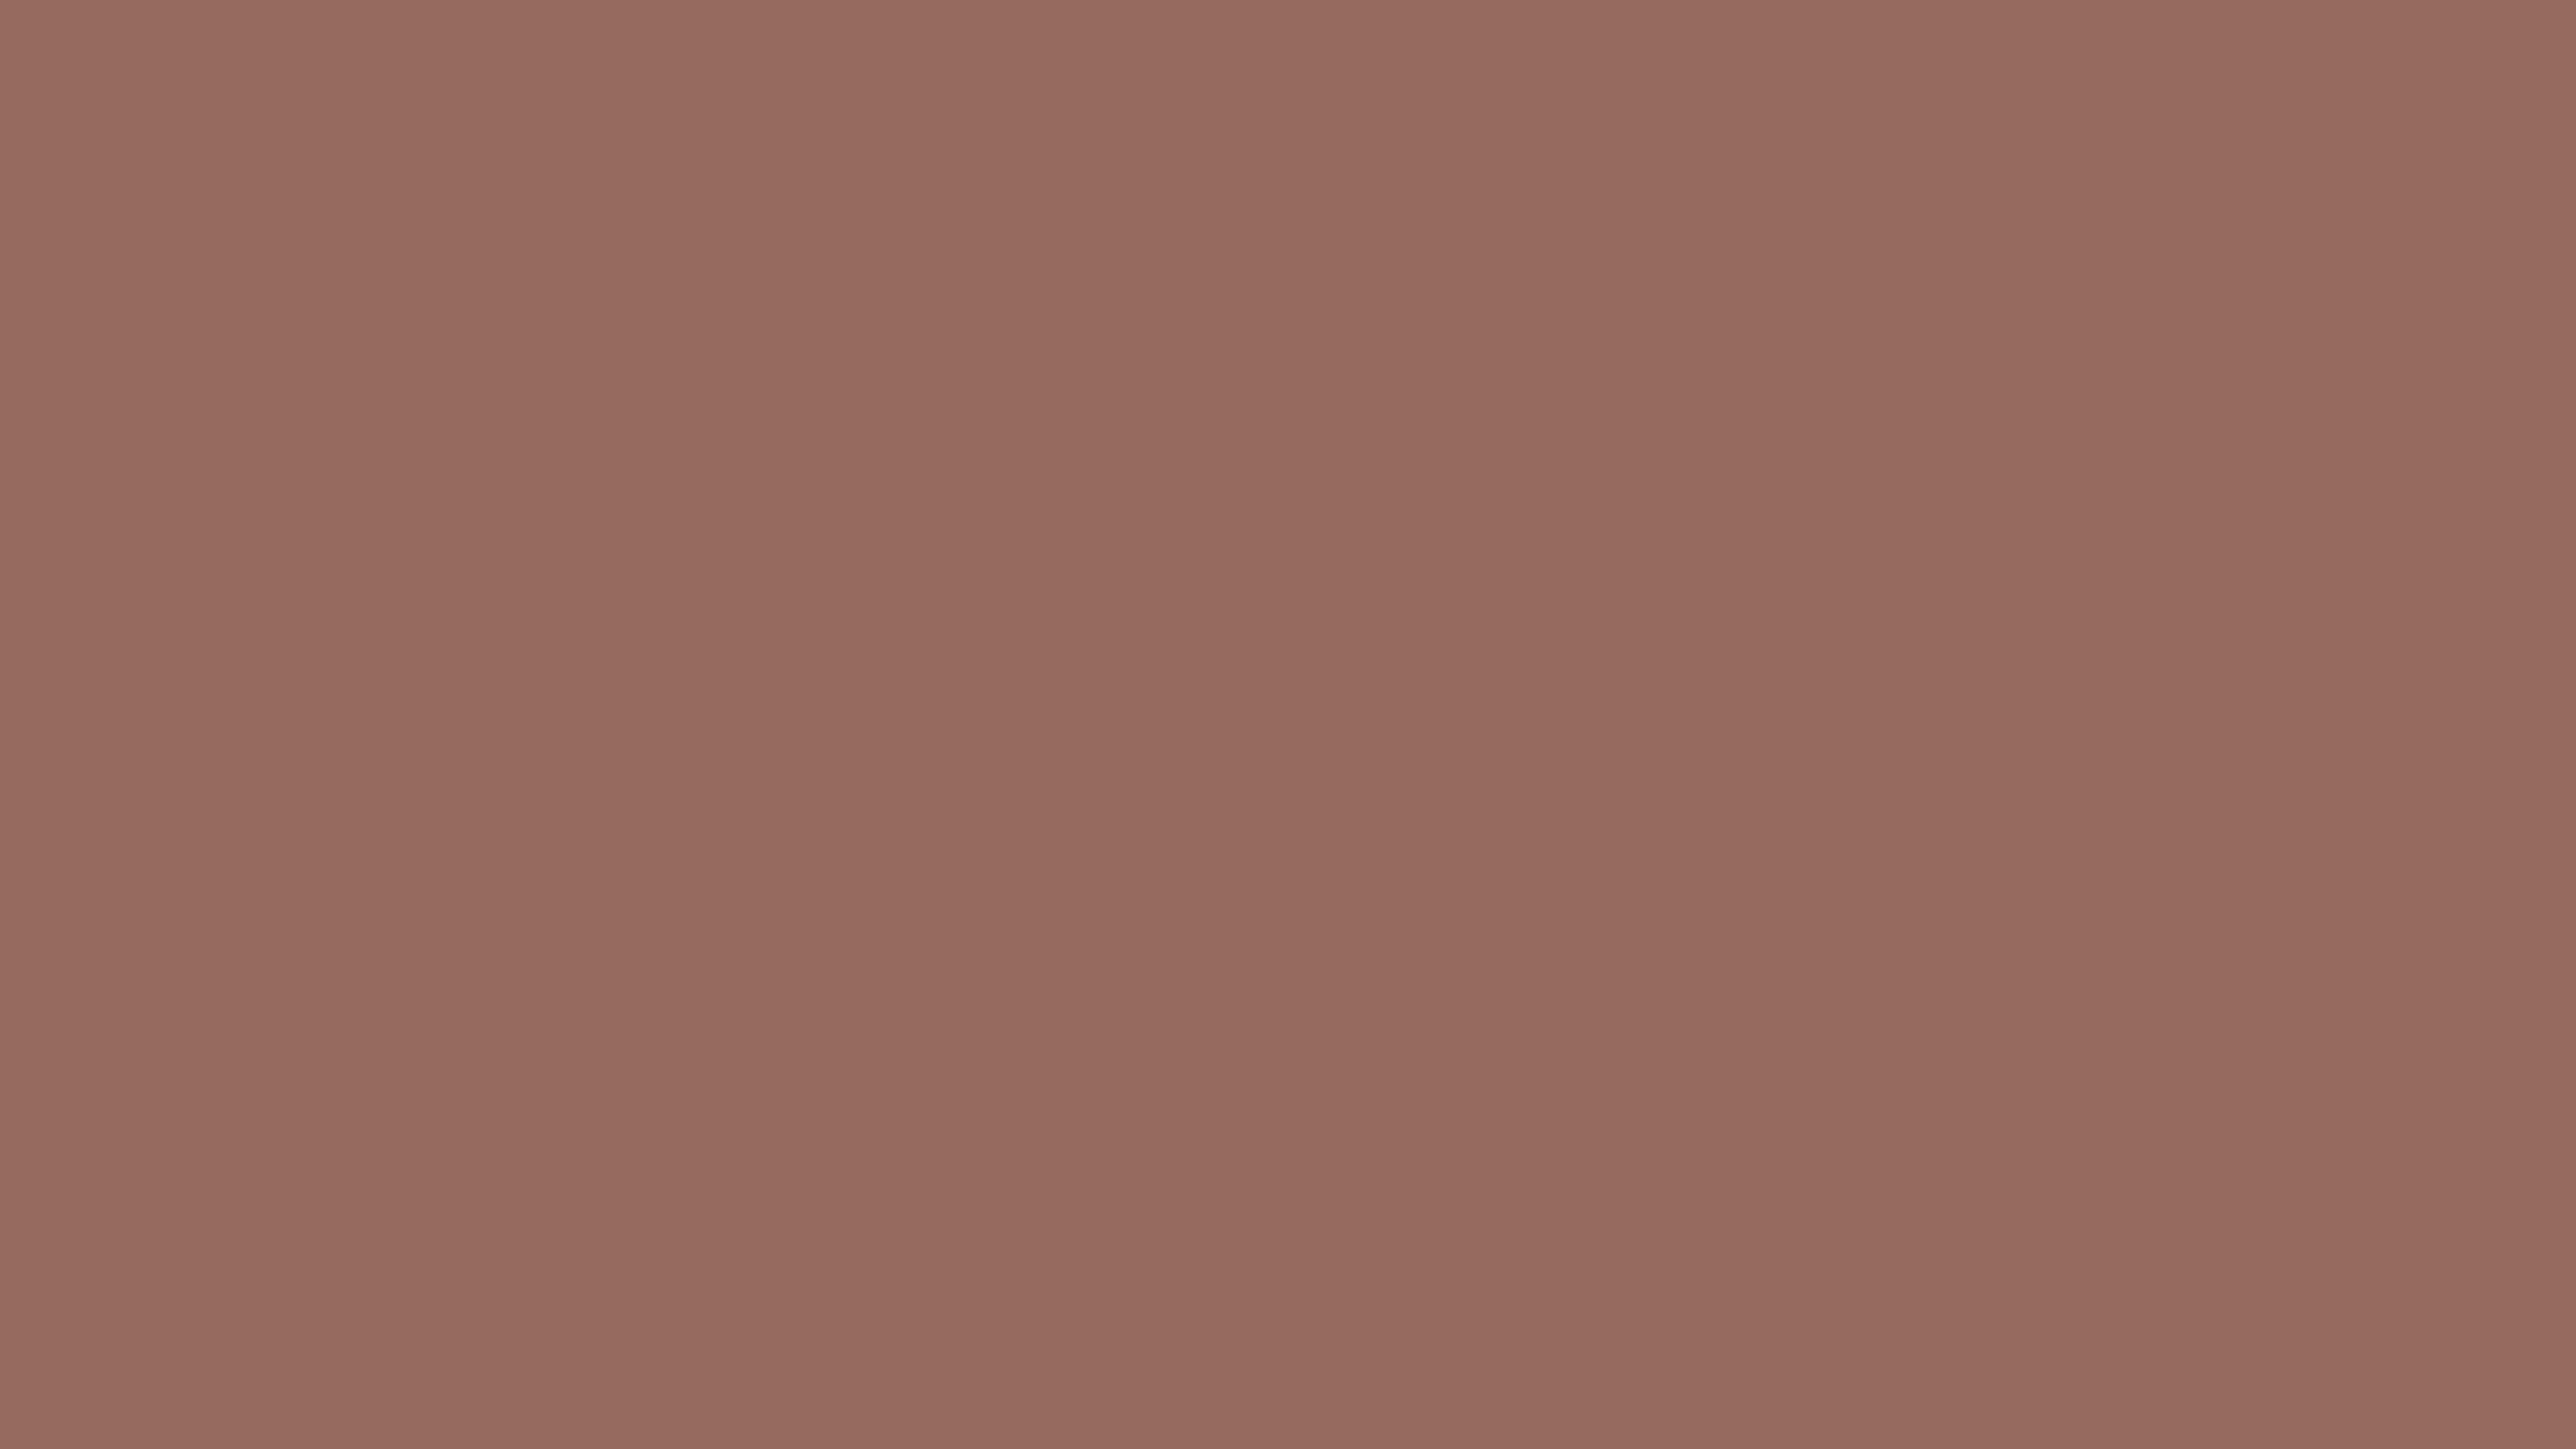 5120x2880 Dark Chestnut Solid Color Background